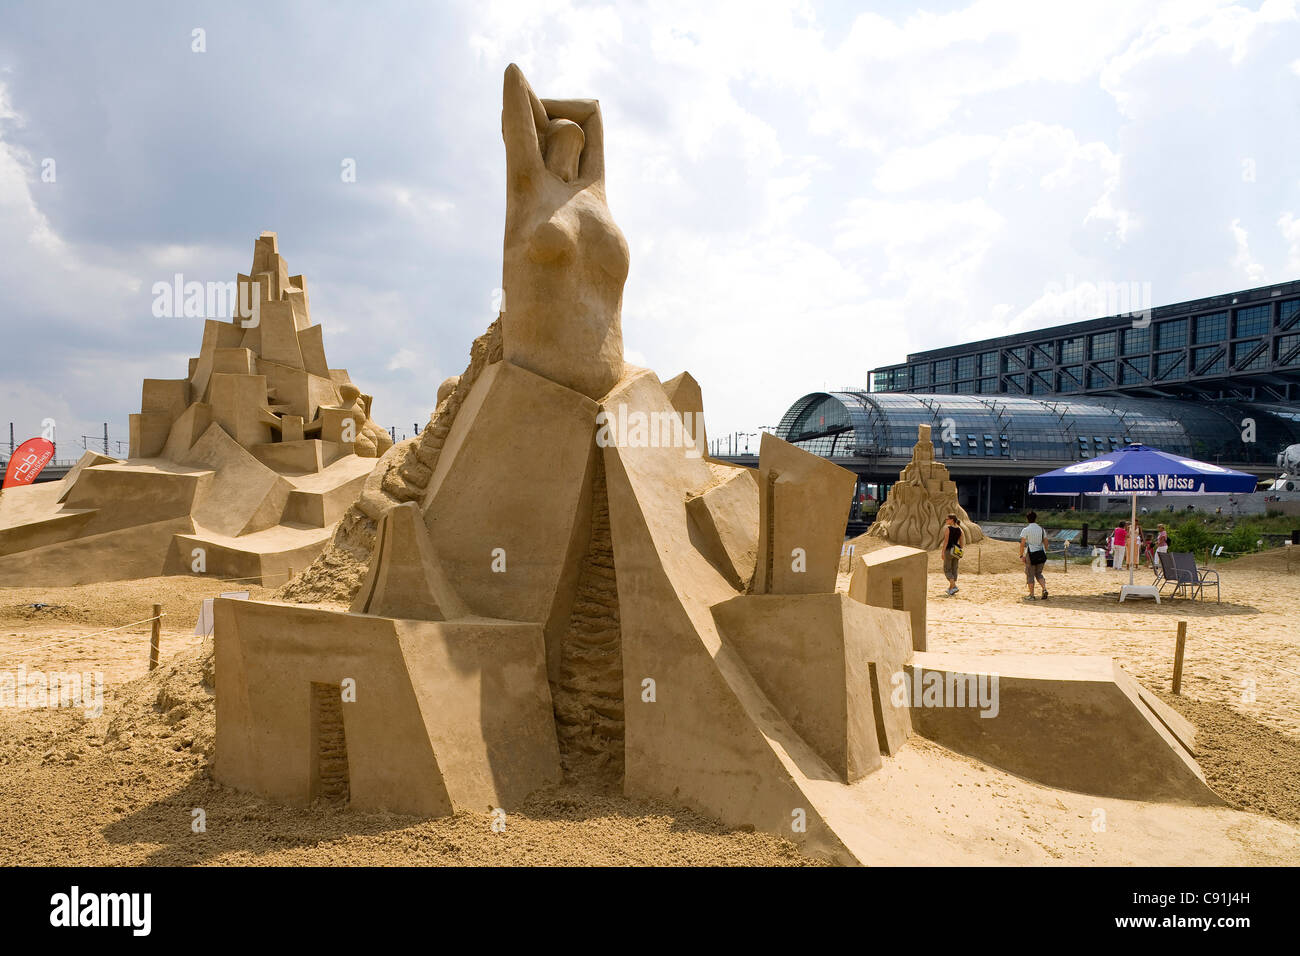 International sand sculpture festival in Berlin at Berlin central ...